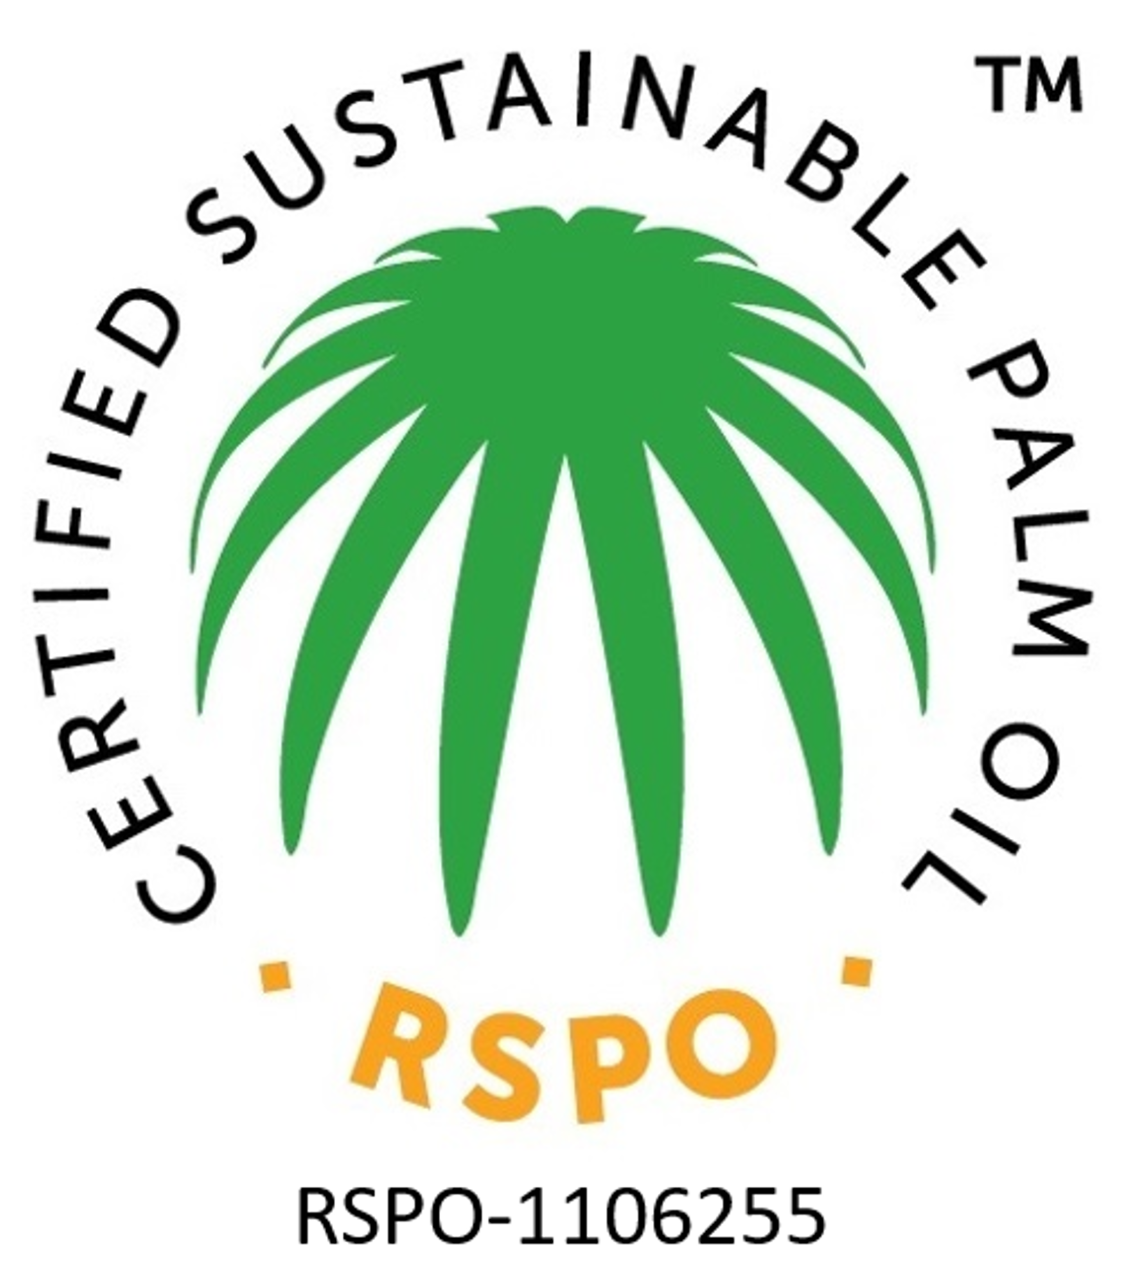 RSPO Logo